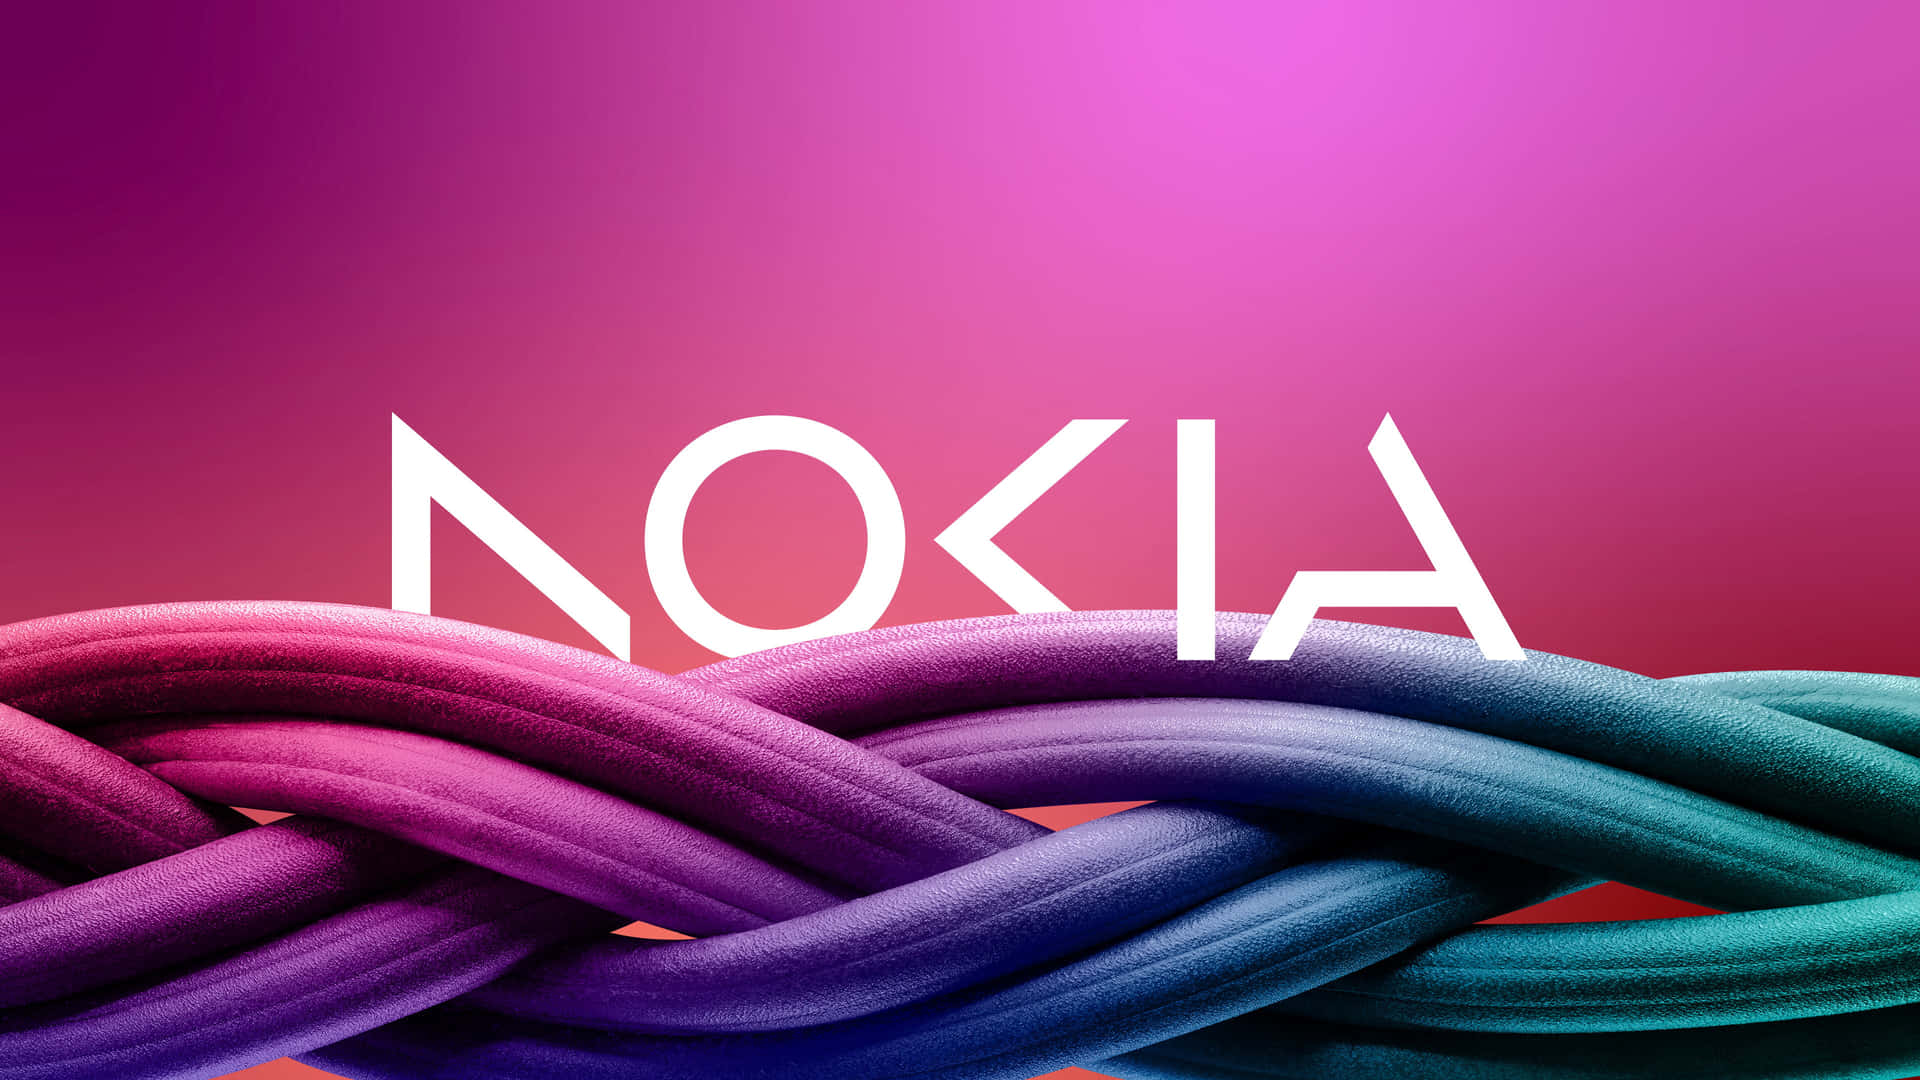 Nokia Background Wallpaper